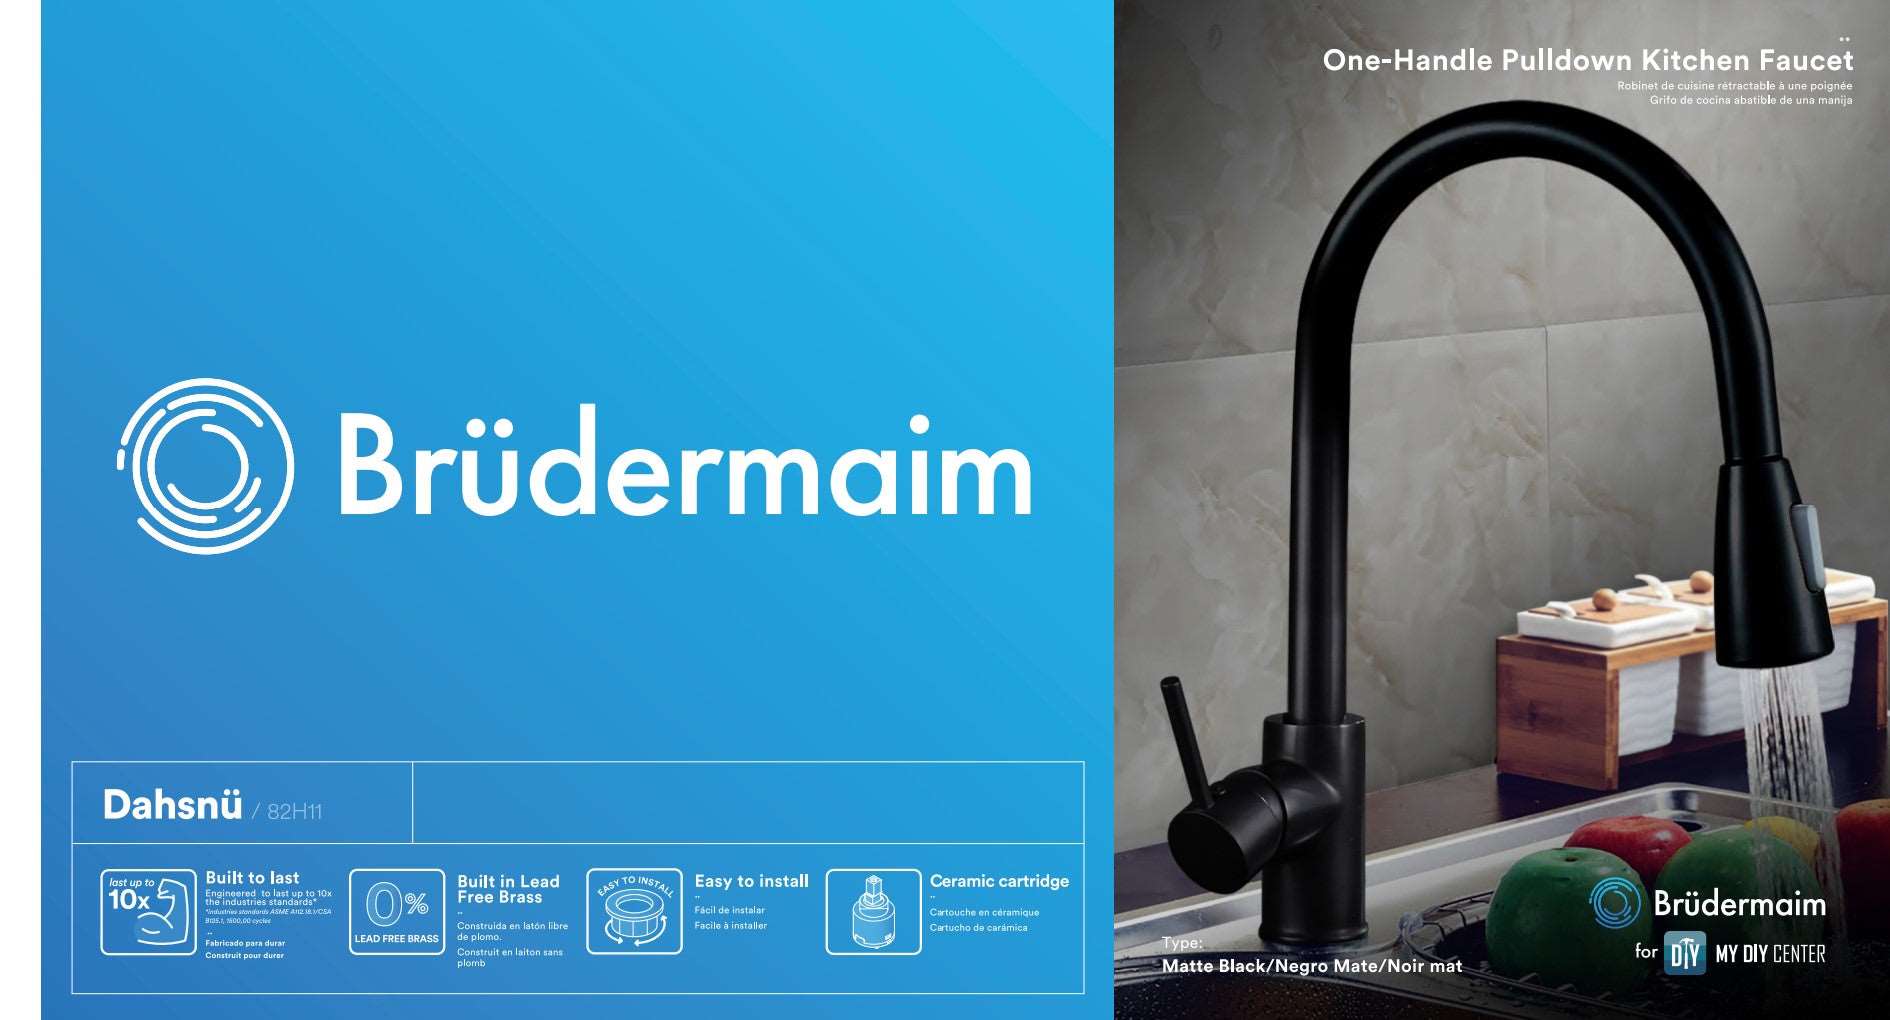 Pulldown Kitchen Faucet - BRÜDERMAIM Dahsnü  - Matte Black - Lead Free Brass - cUPC Certified - Ceramic Cartridge.